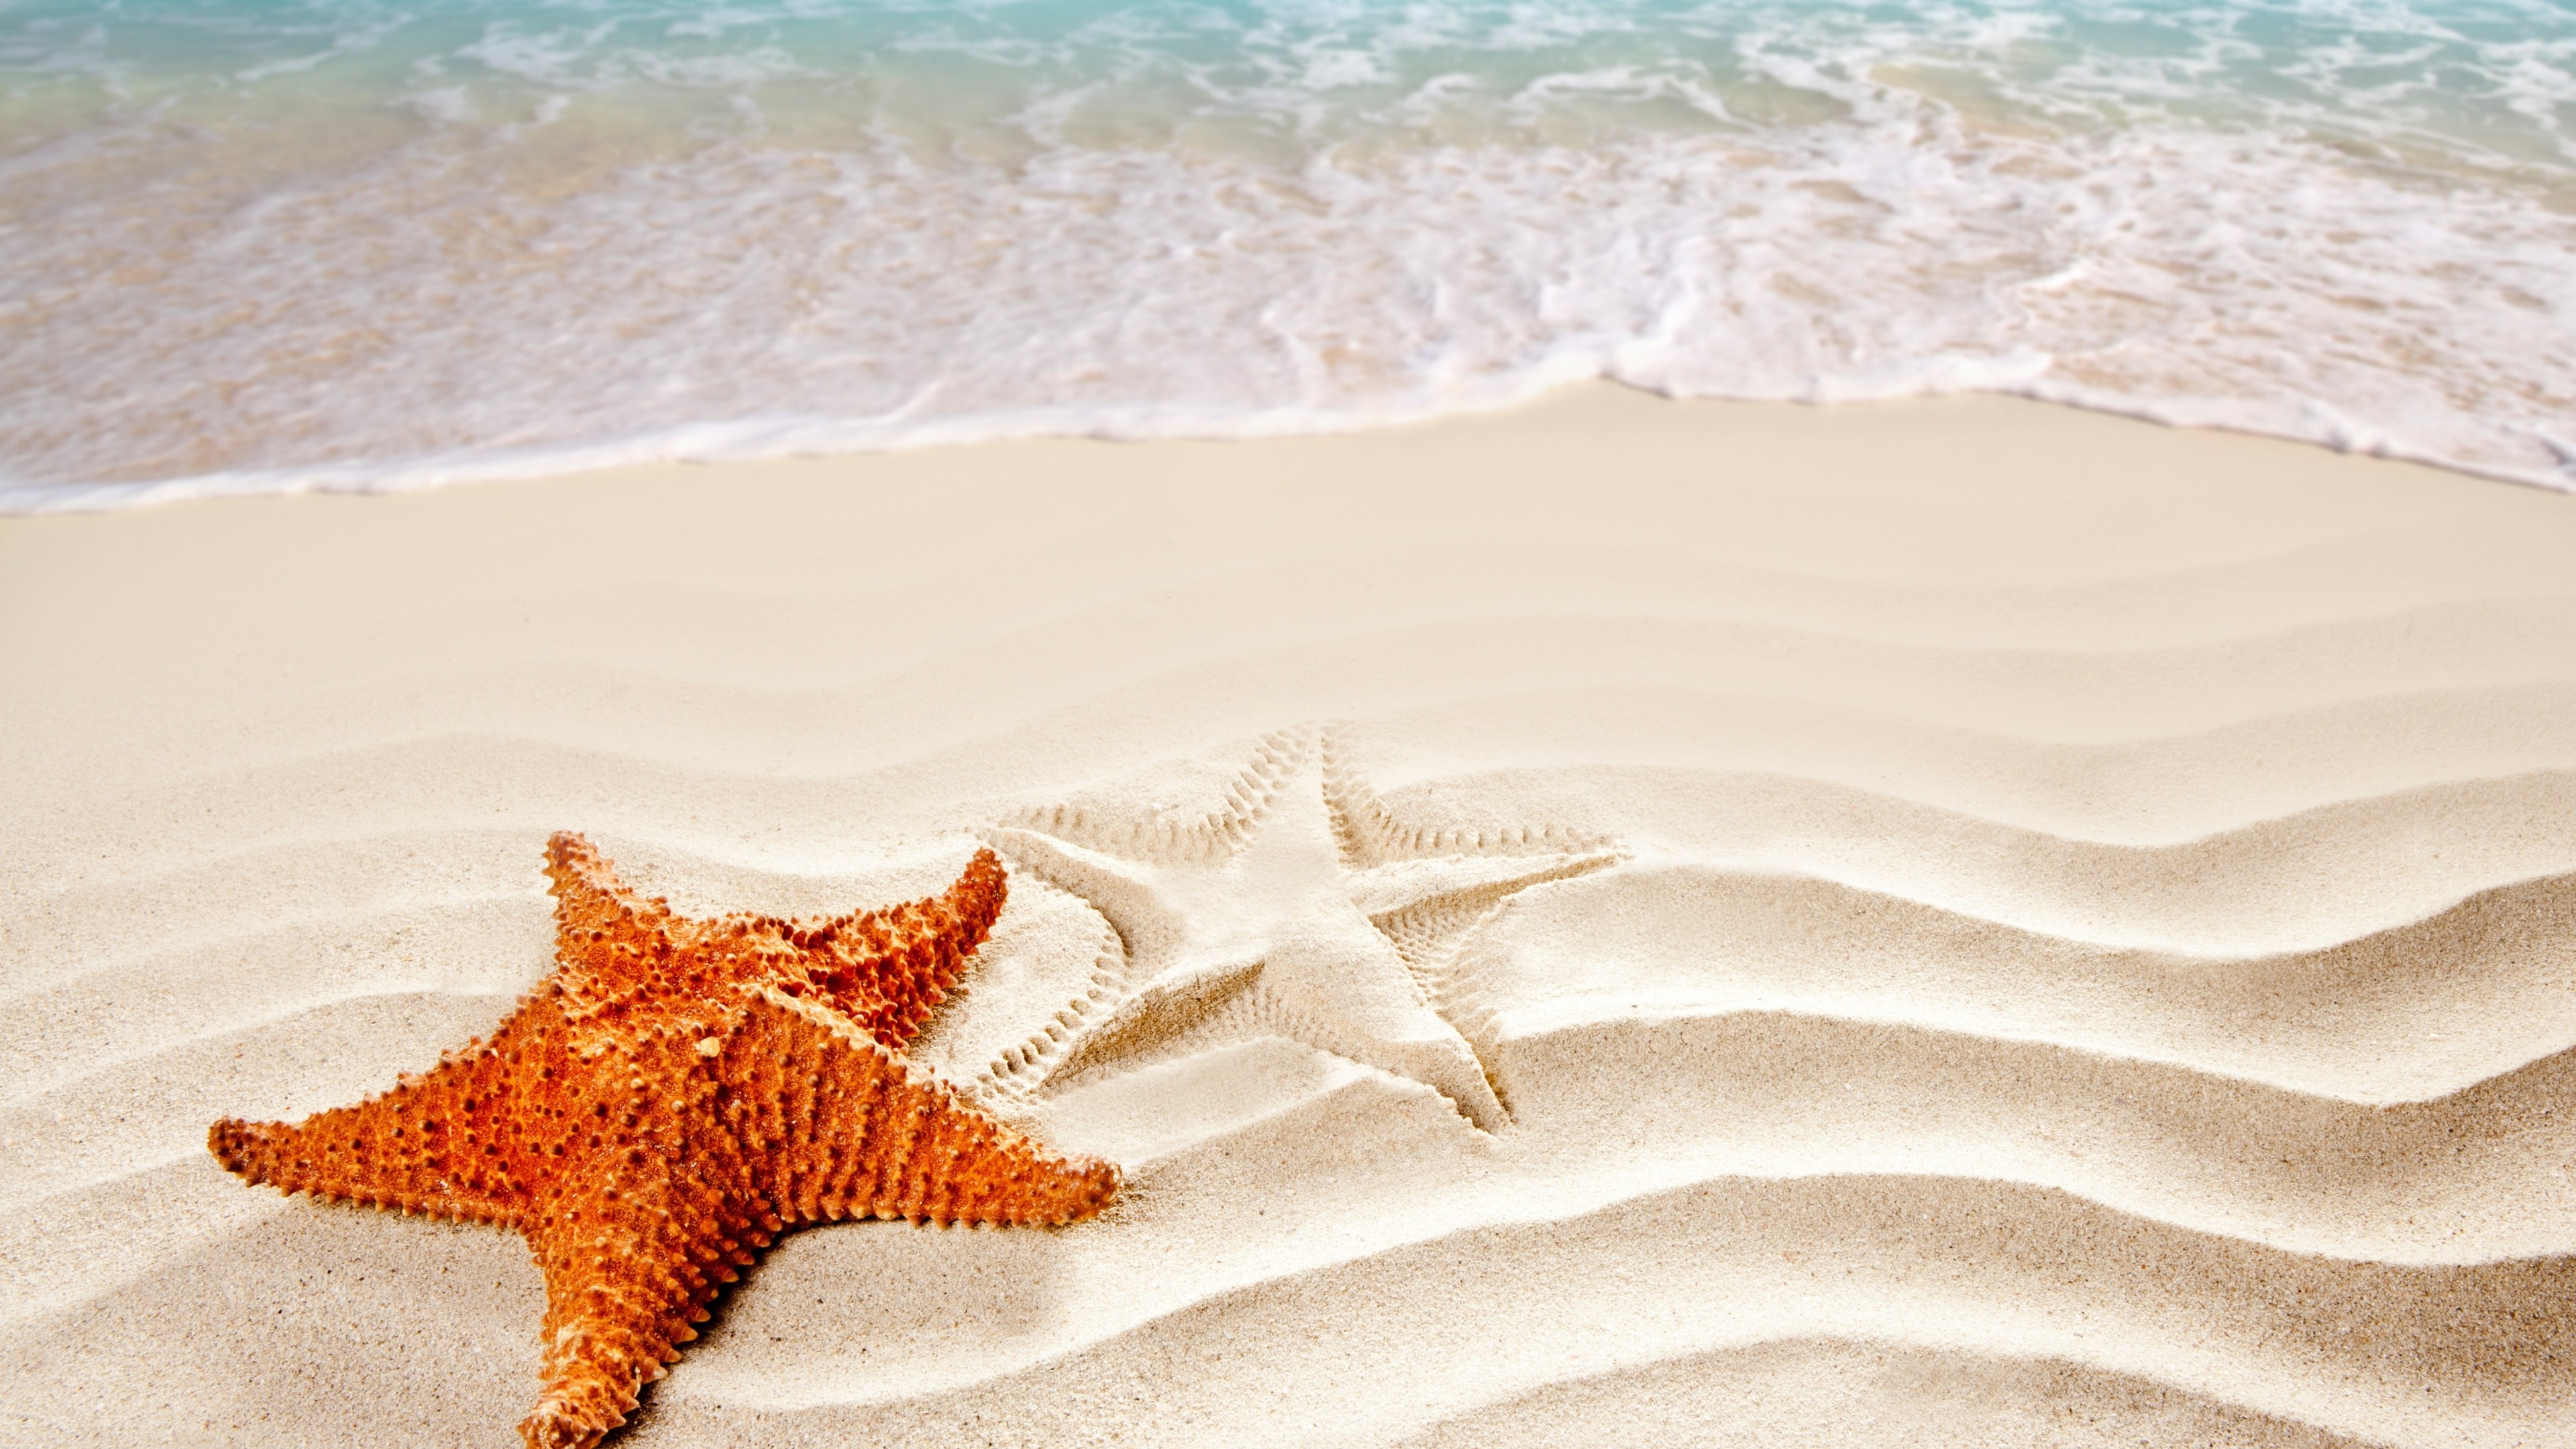 Sea Star: Ocean, Starfish, Shore, Beach, Marine invertebrates. 3840x2160 4K Wallpaper.